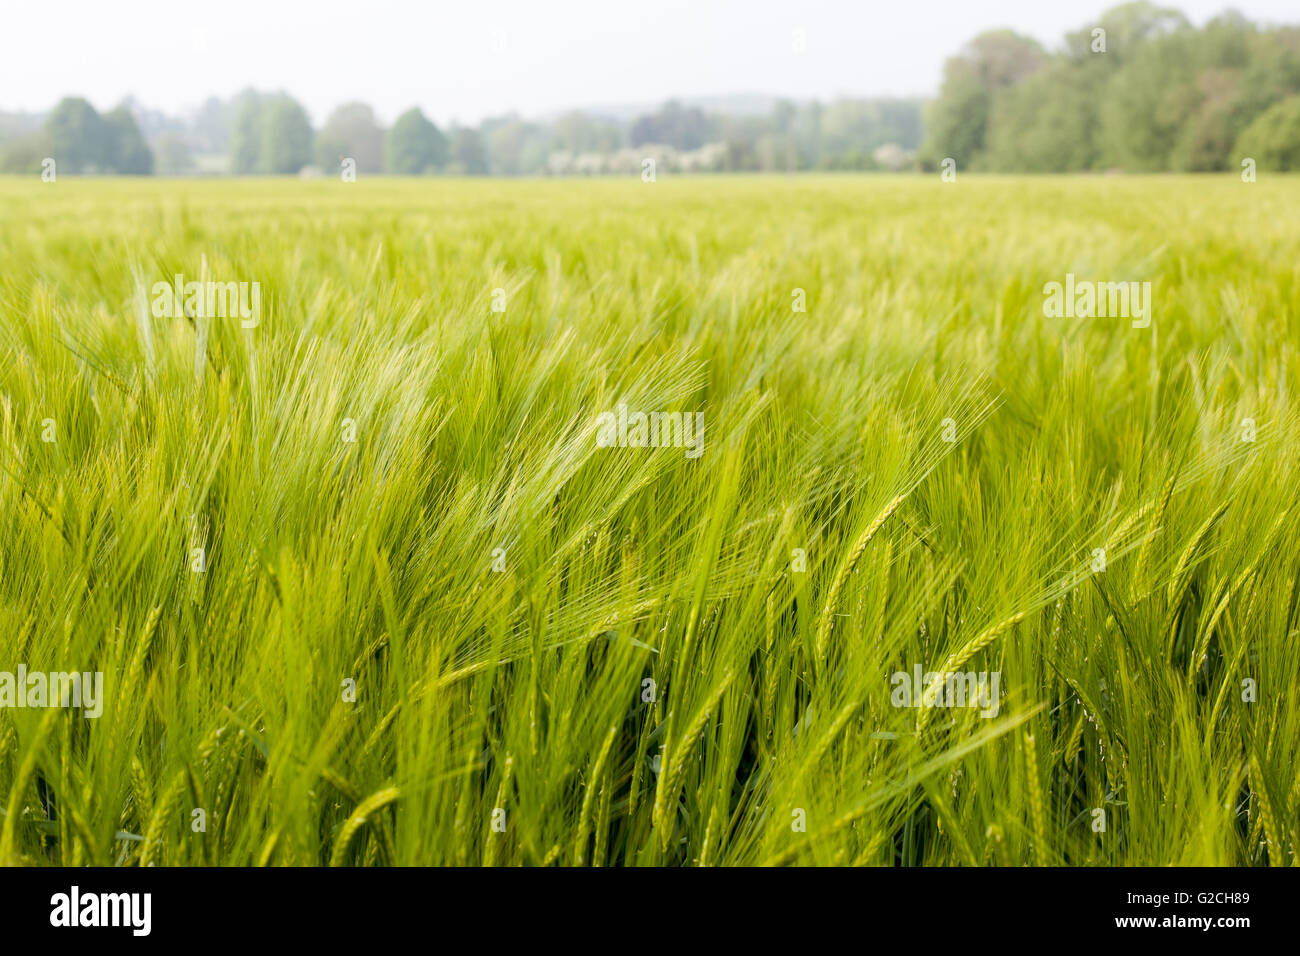 Field of green wheat near Chilham, Kent, England. Stock Photo